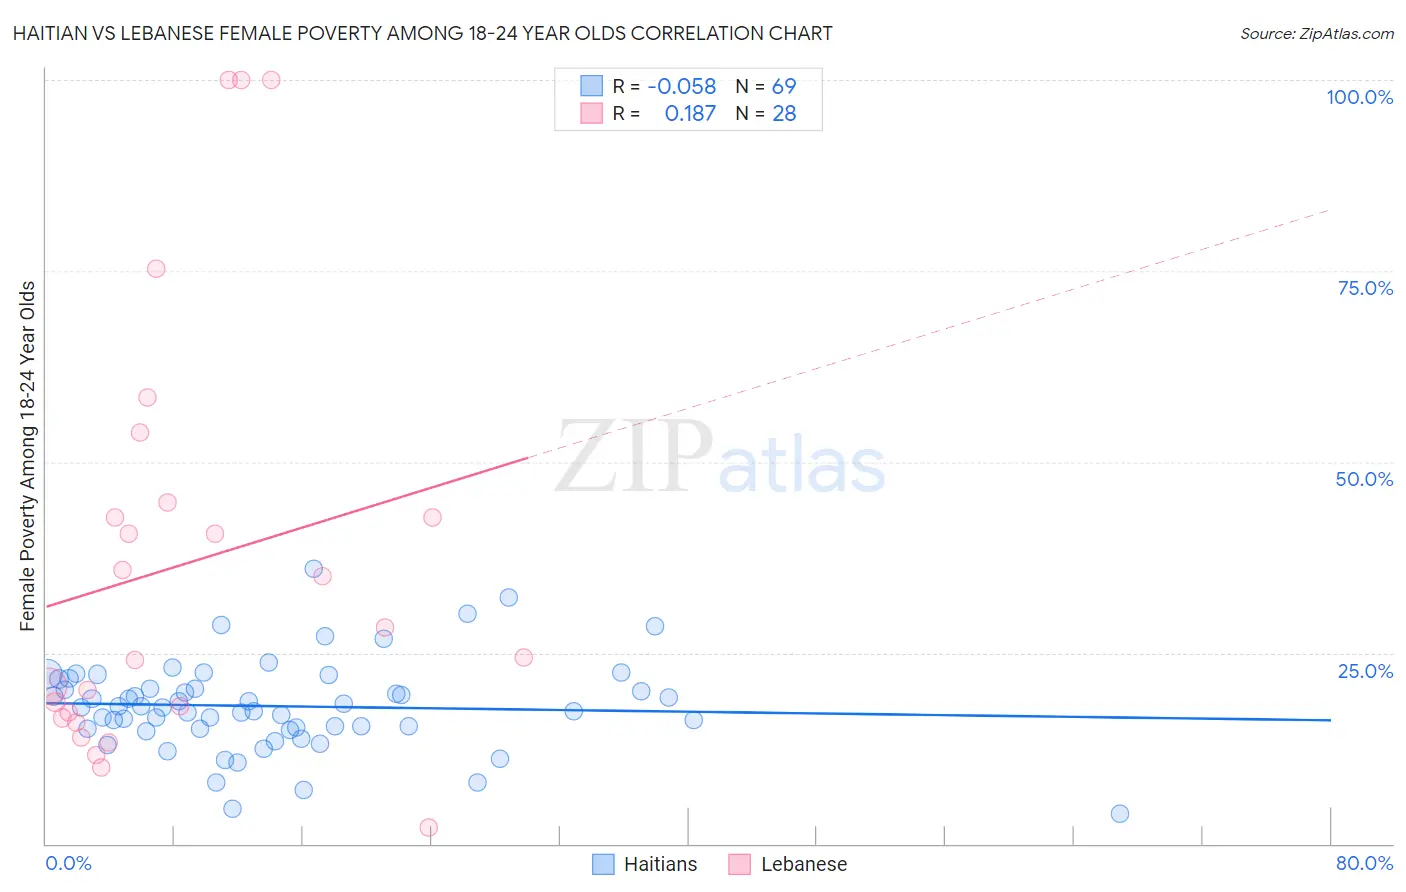 Haitian vs Lebanese Female Poverty Among 18-24 Year Olds